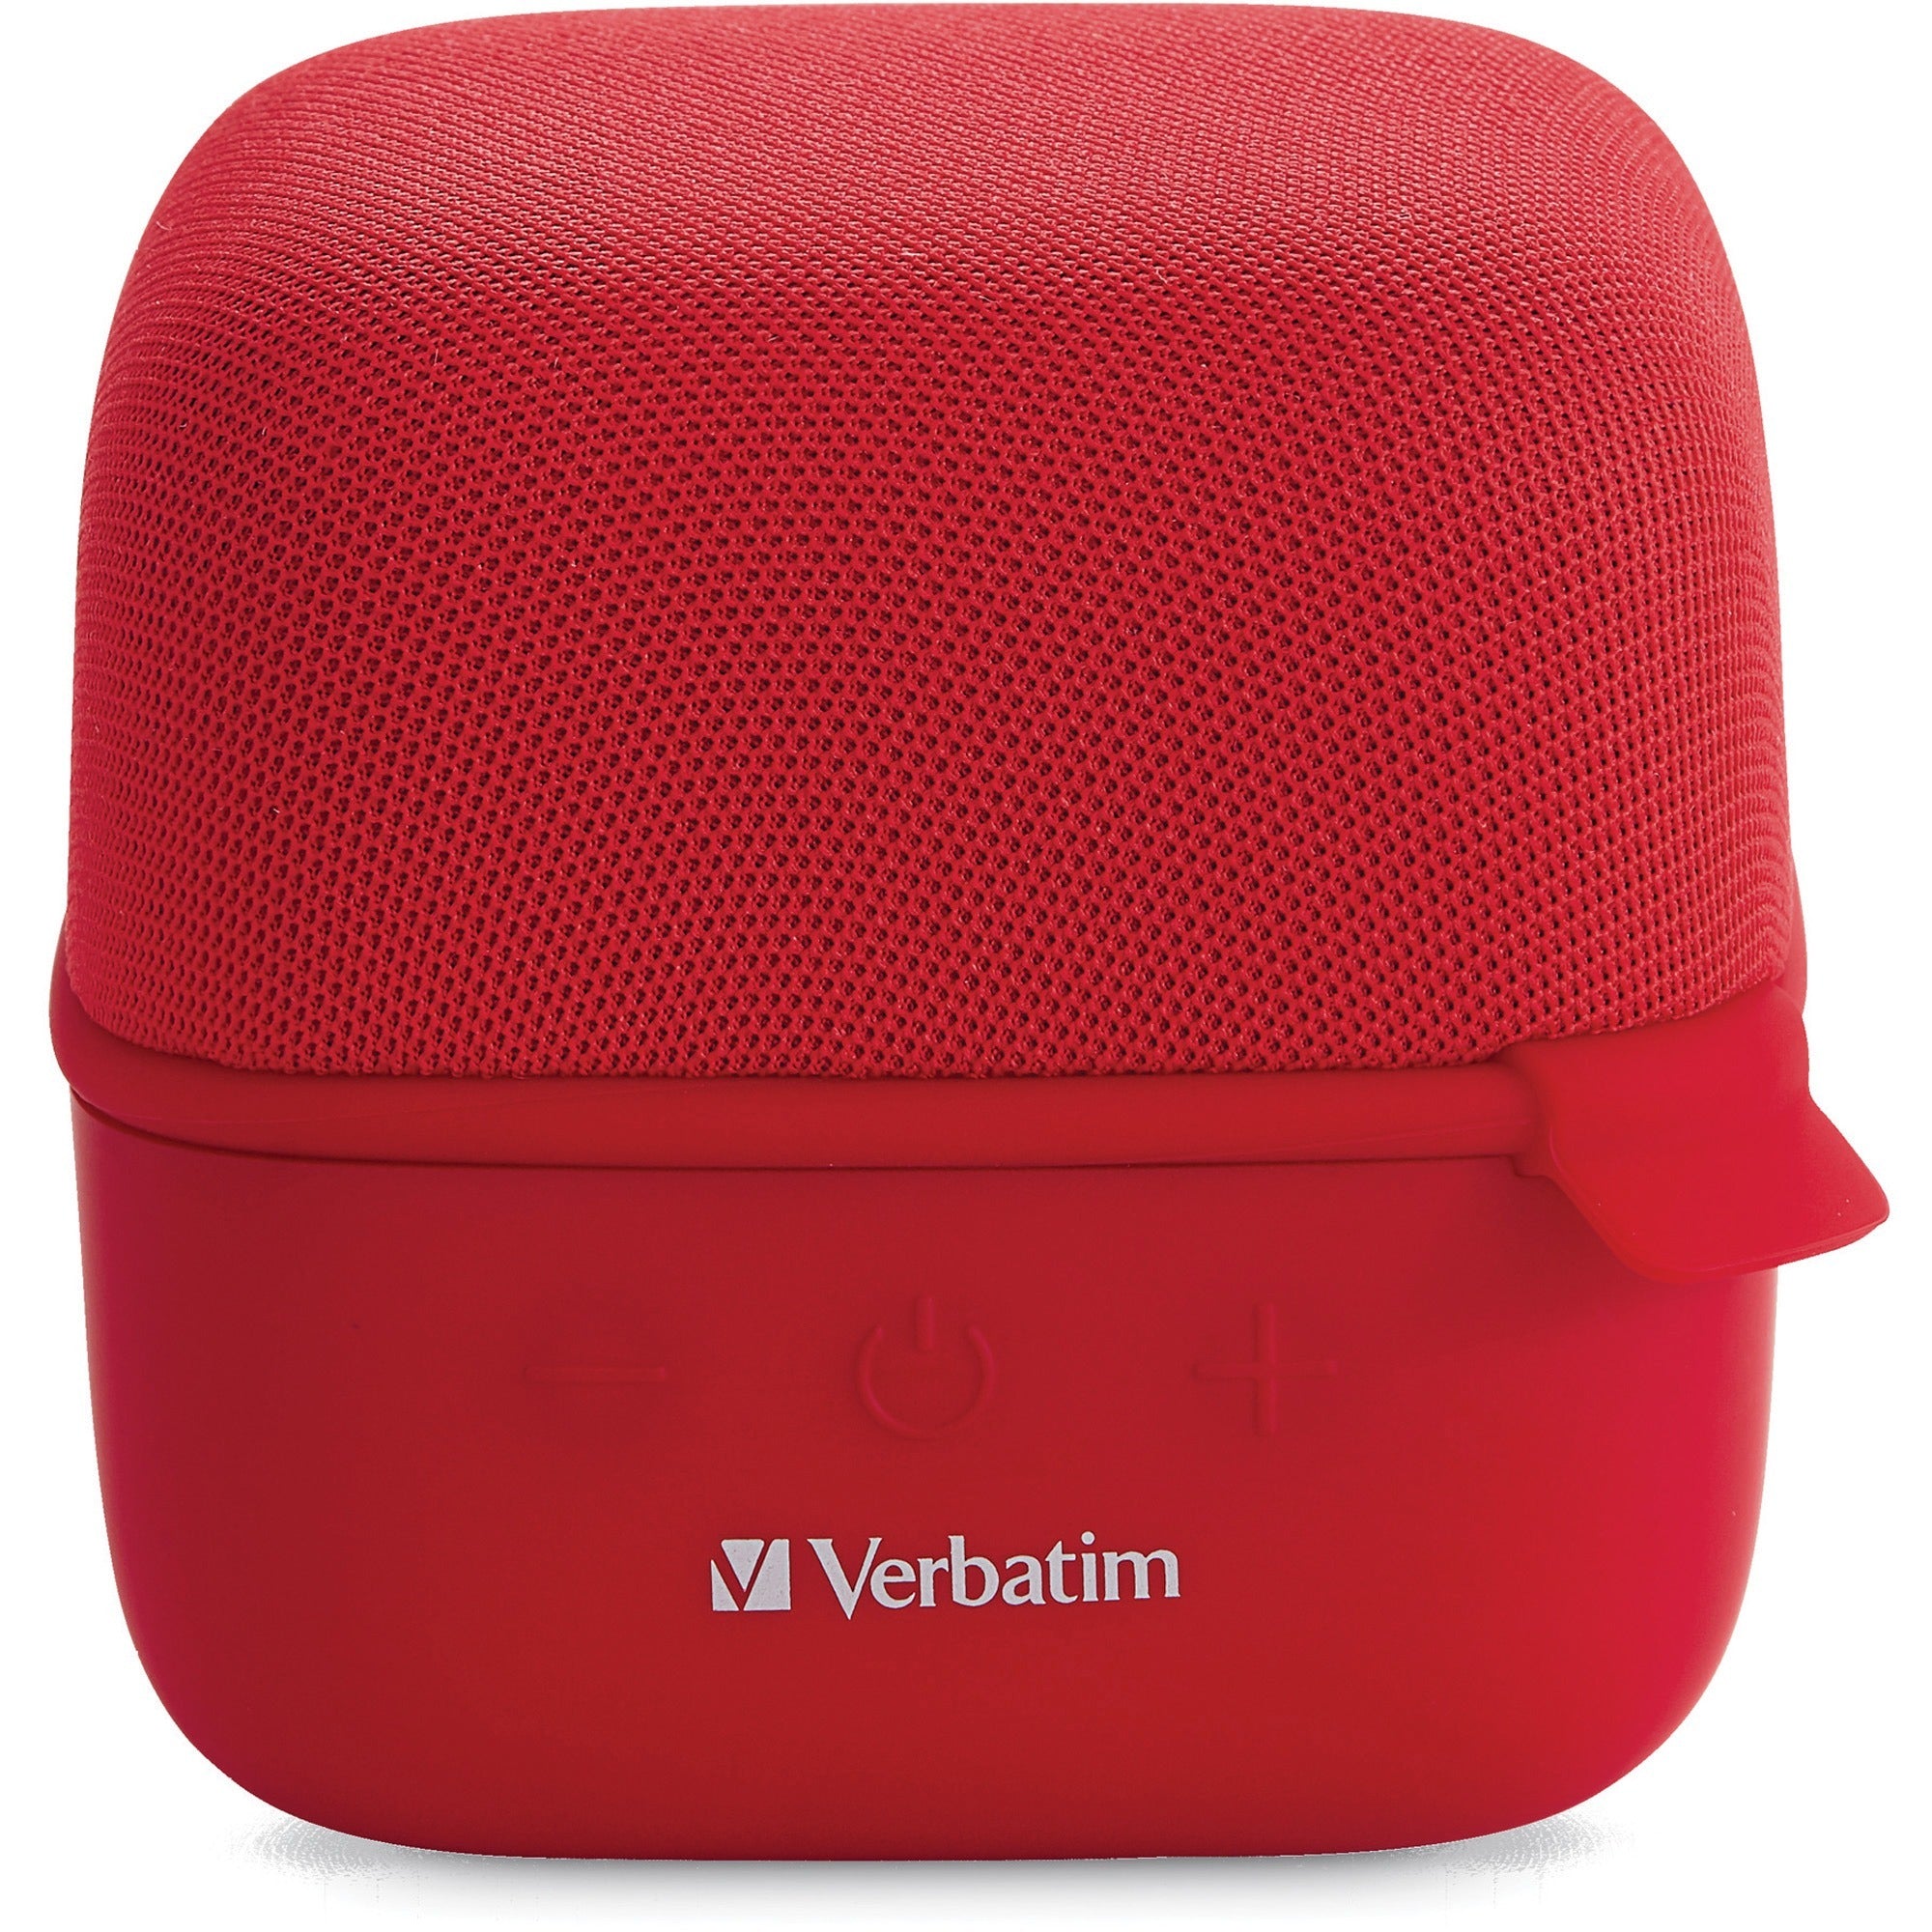 verbatim-bluetooth-speaker-system-red-100-hz-to-20-khz-truewireless-stereo-battery-rechargeable-1-pack_ver70225 - 1